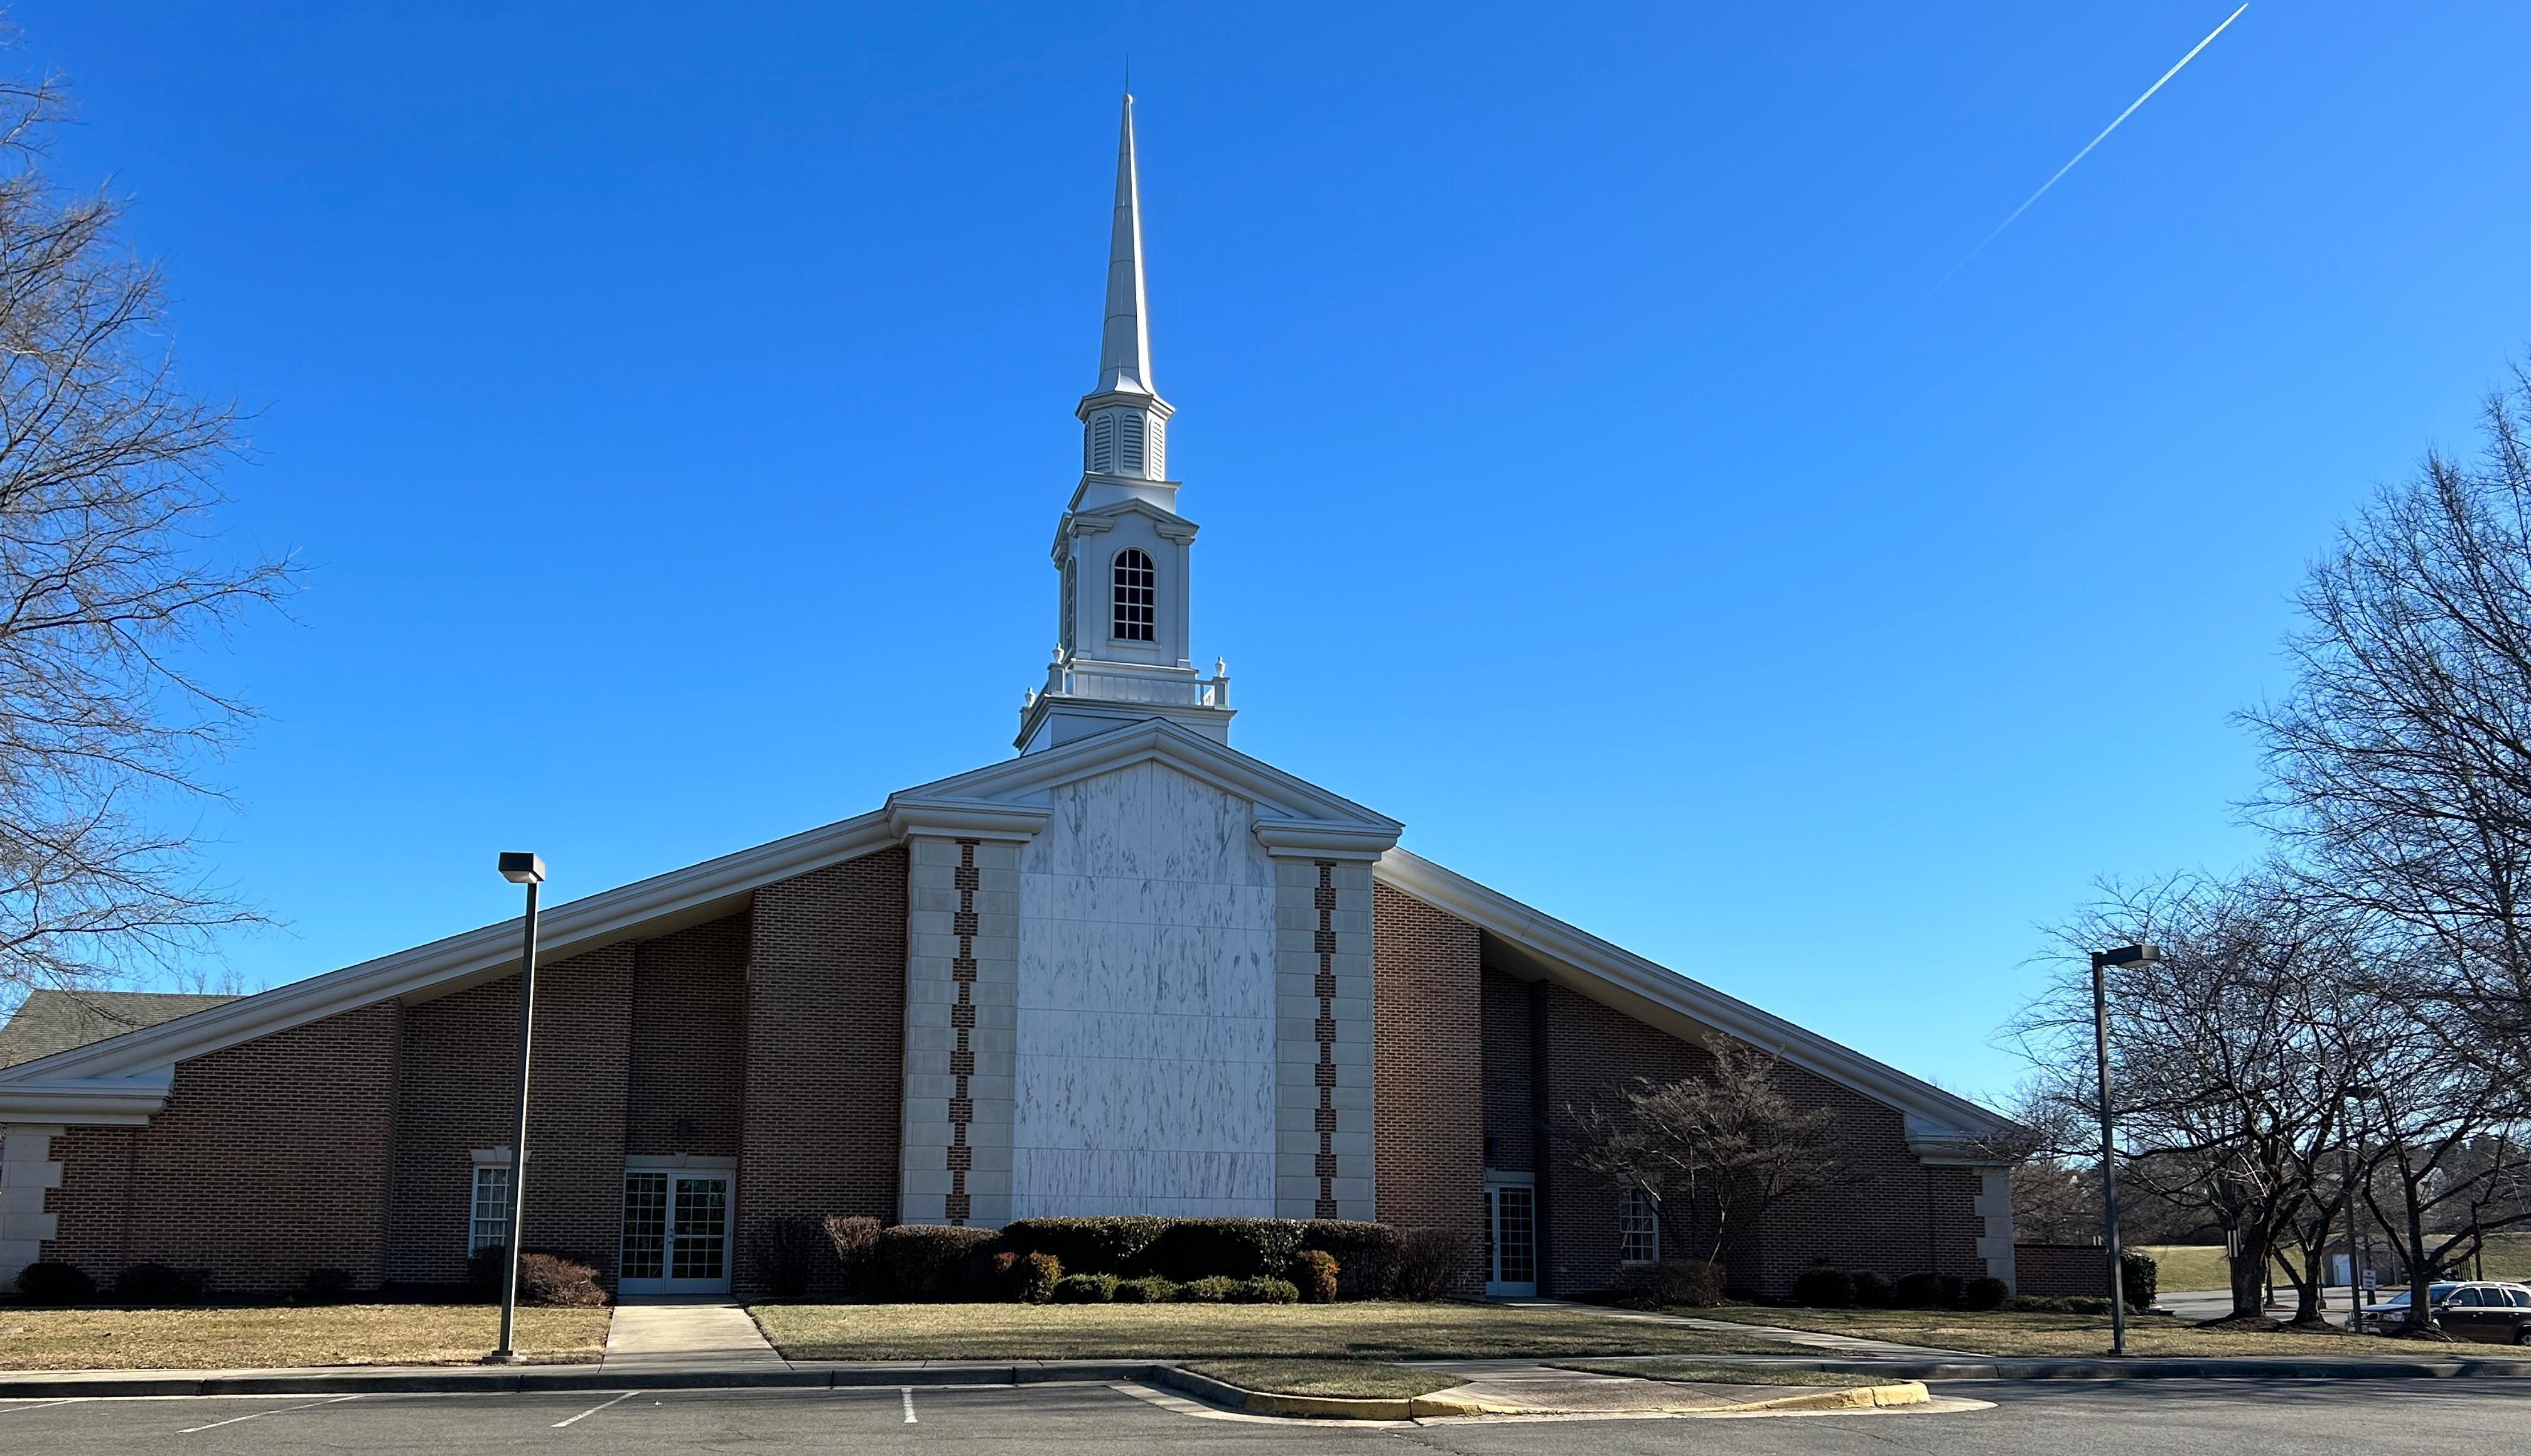 Centreville VA Meetinghouse for Church of Jesus Christ of Latter Day Saints